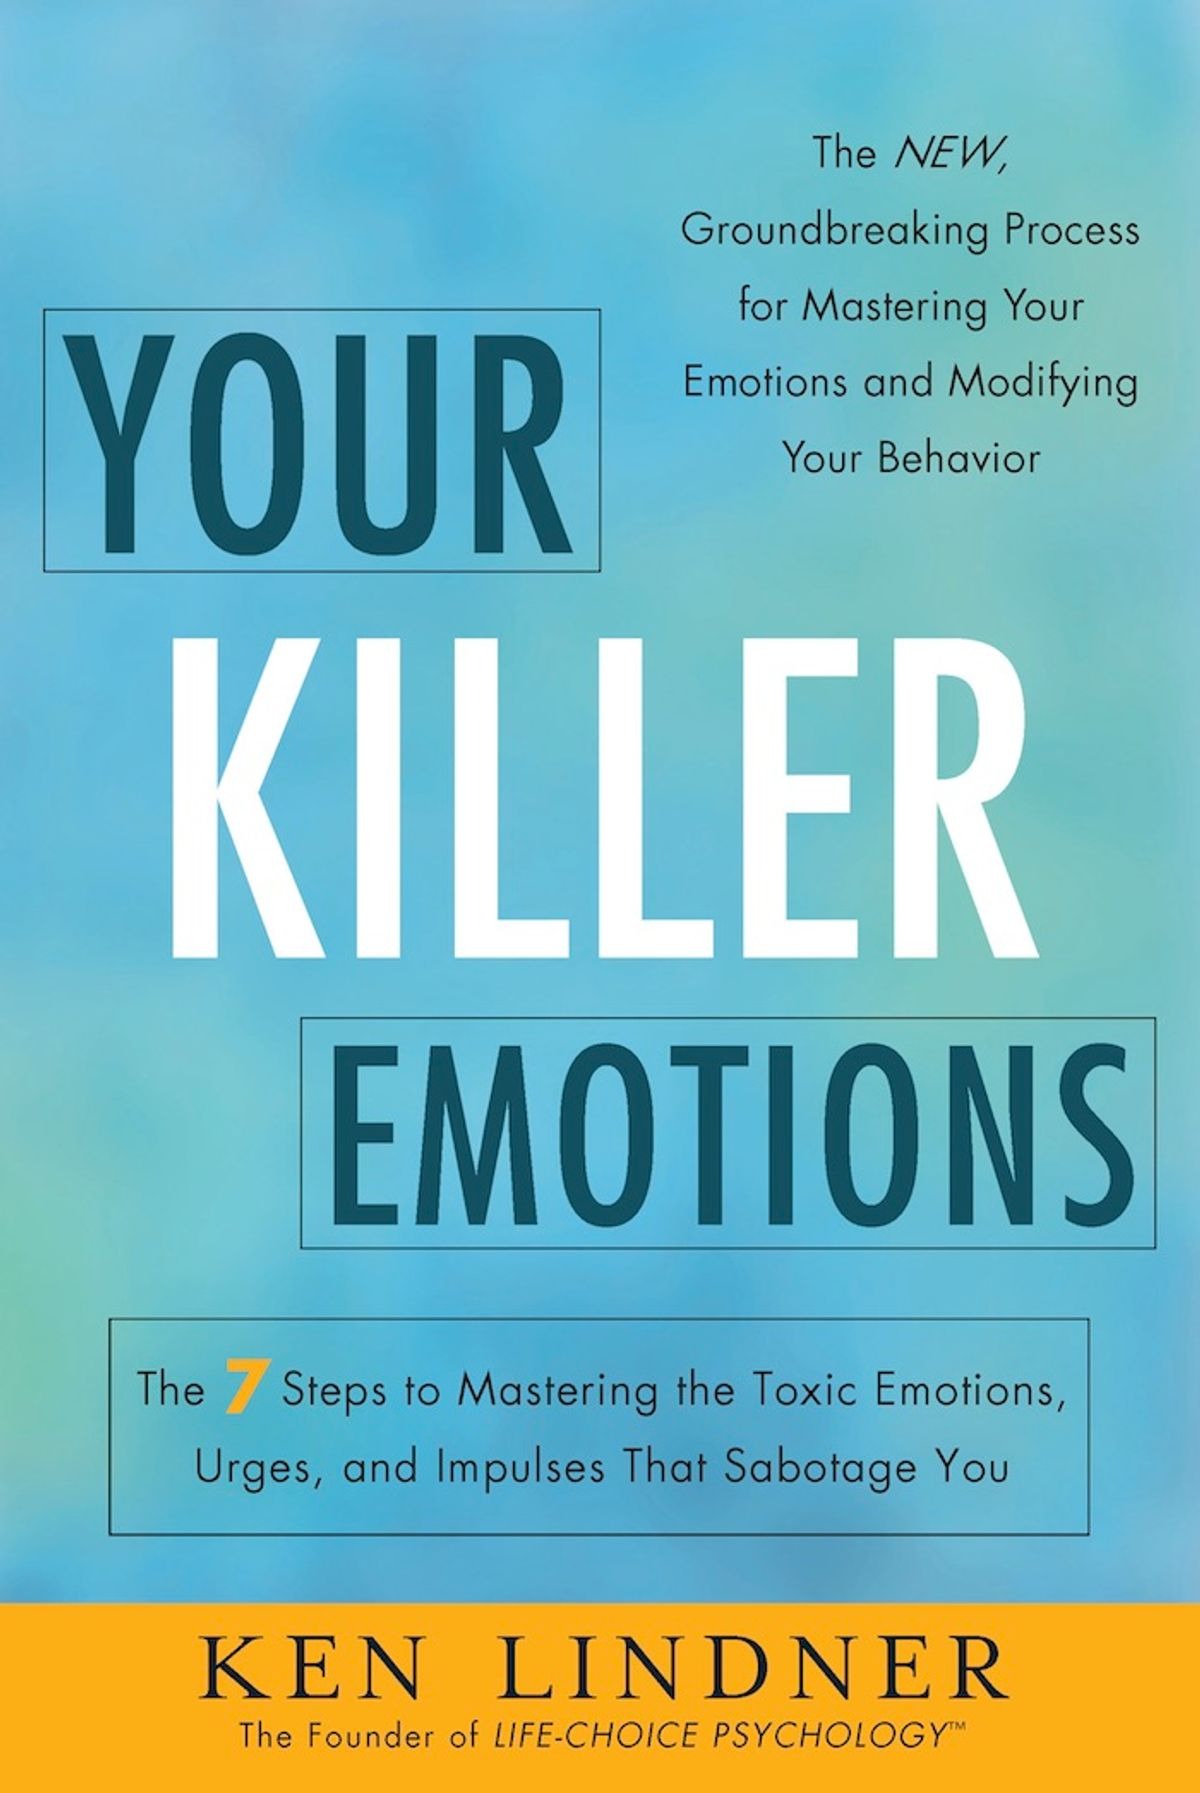 Your killer. Книга эмоции. Master your emotions книга.